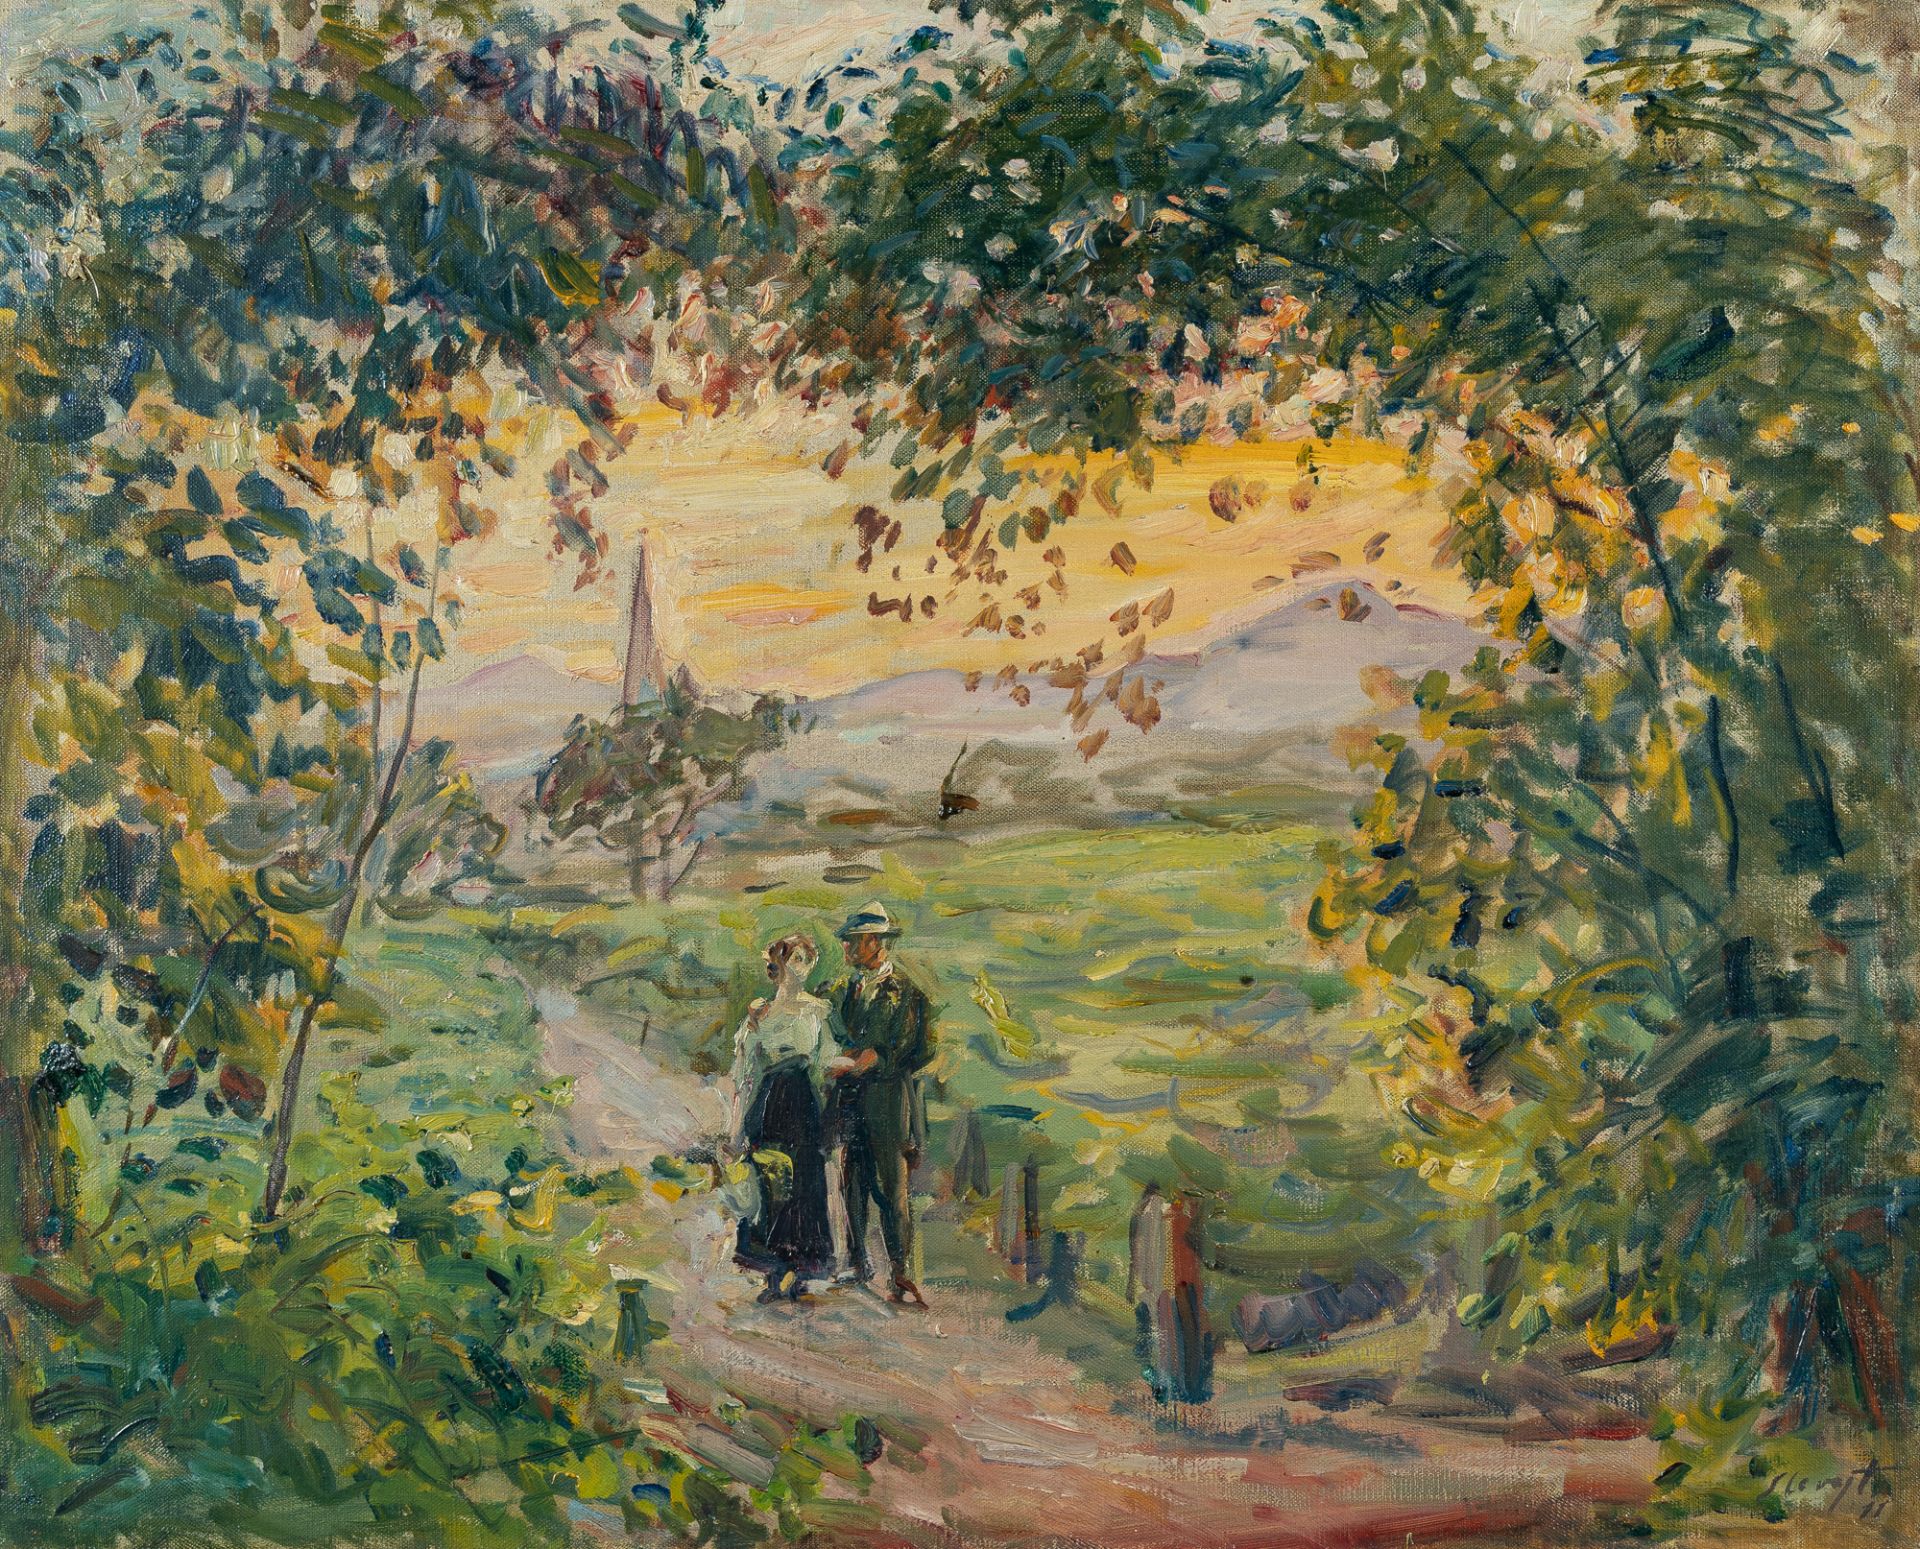 Max Slevogt (1868 Landshut - Neukastel/Pfalz 1932), The walk (Evening scene with a couple / View